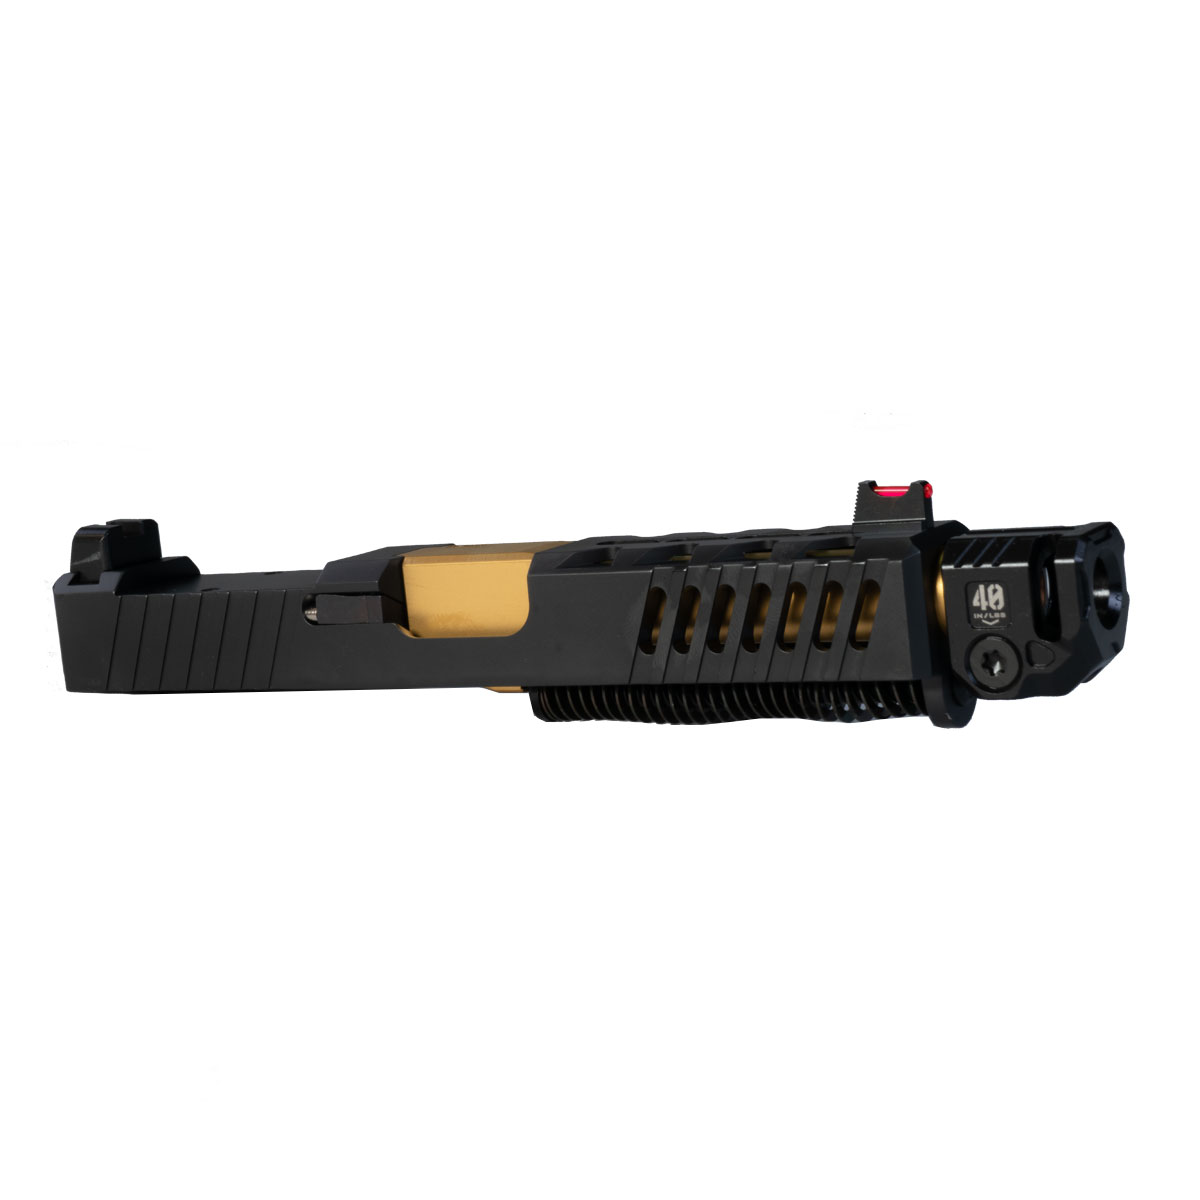 DTT 'Obsidio w/ Strike Industries Compensator' 9mm Complete Slide Kit - Glock 19 Gen 1-3 Compatible